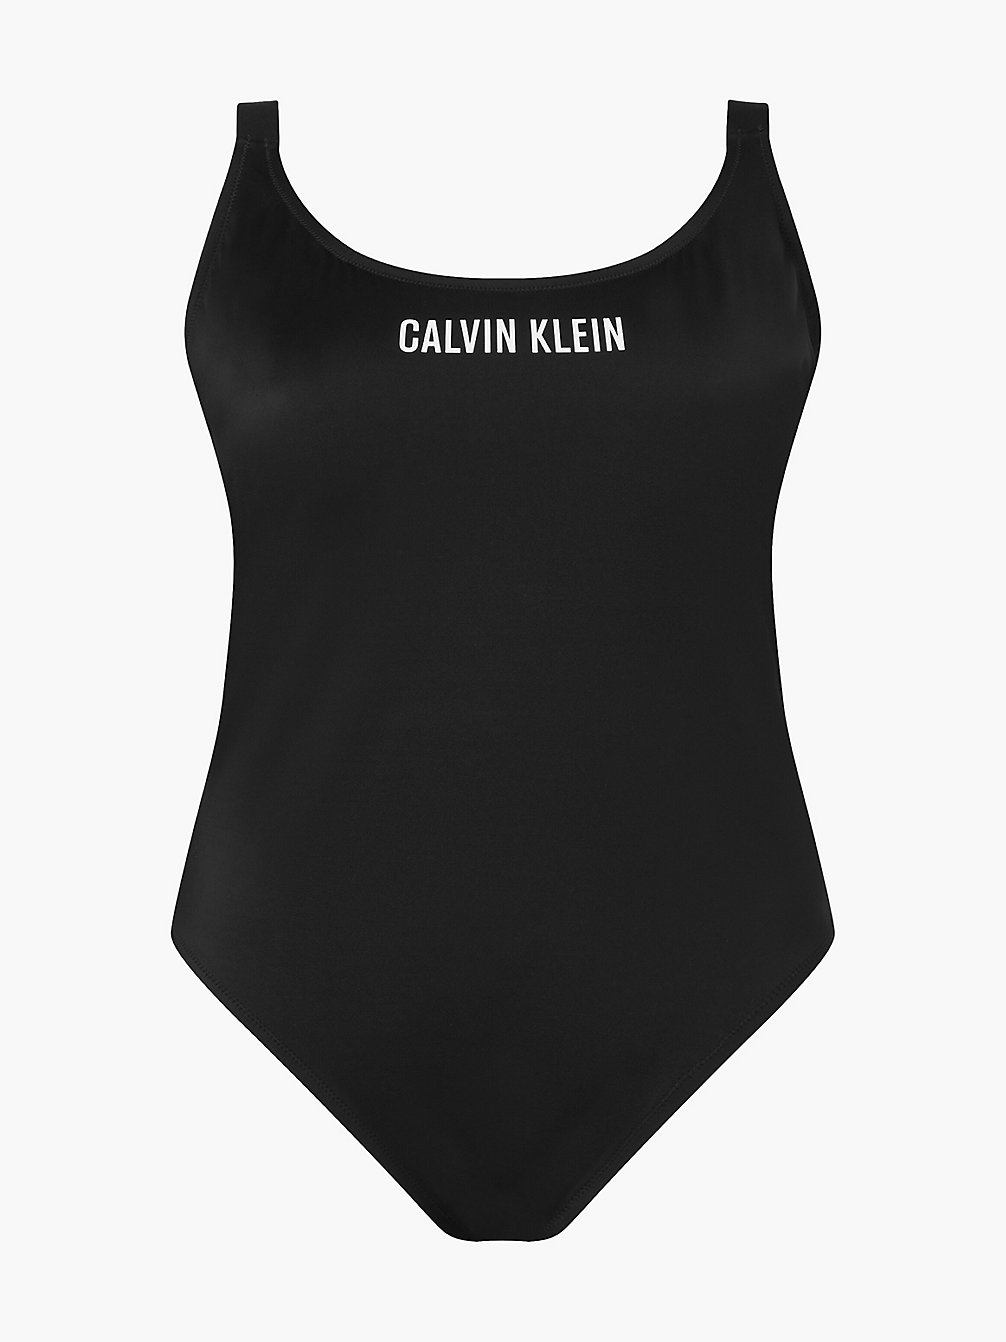 PVH BLACK > Слитный купальник плюс-сайз - Intense Power > undefined Женщины - Calvin Klein